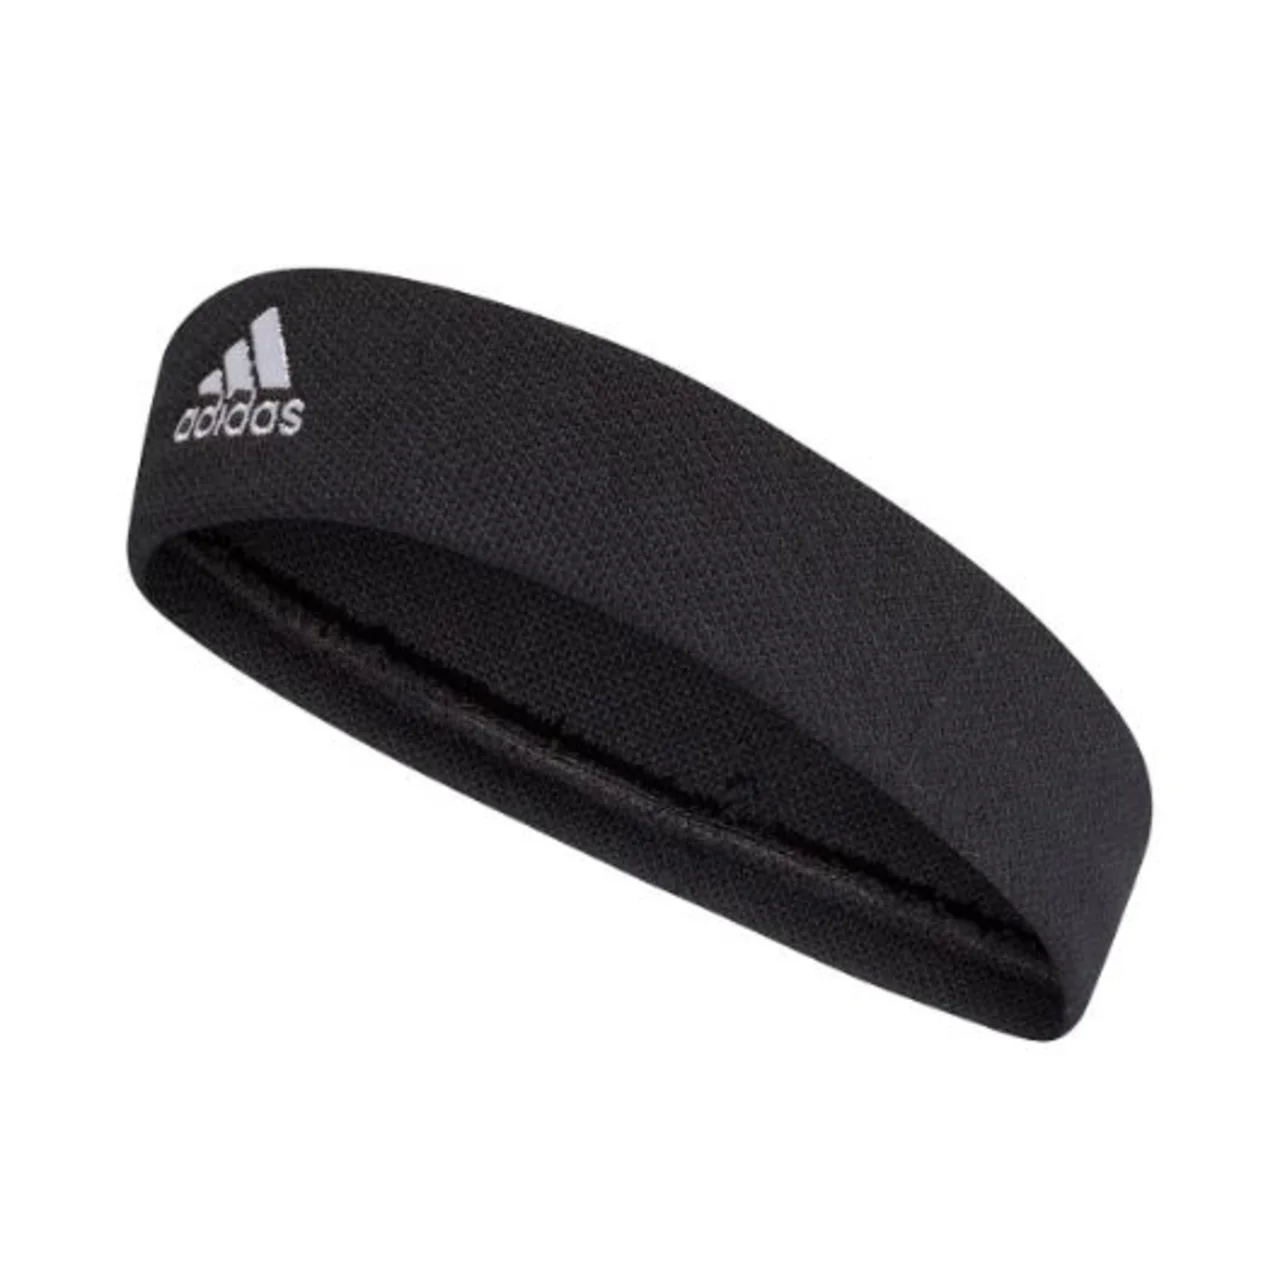 Adidas Headband Black